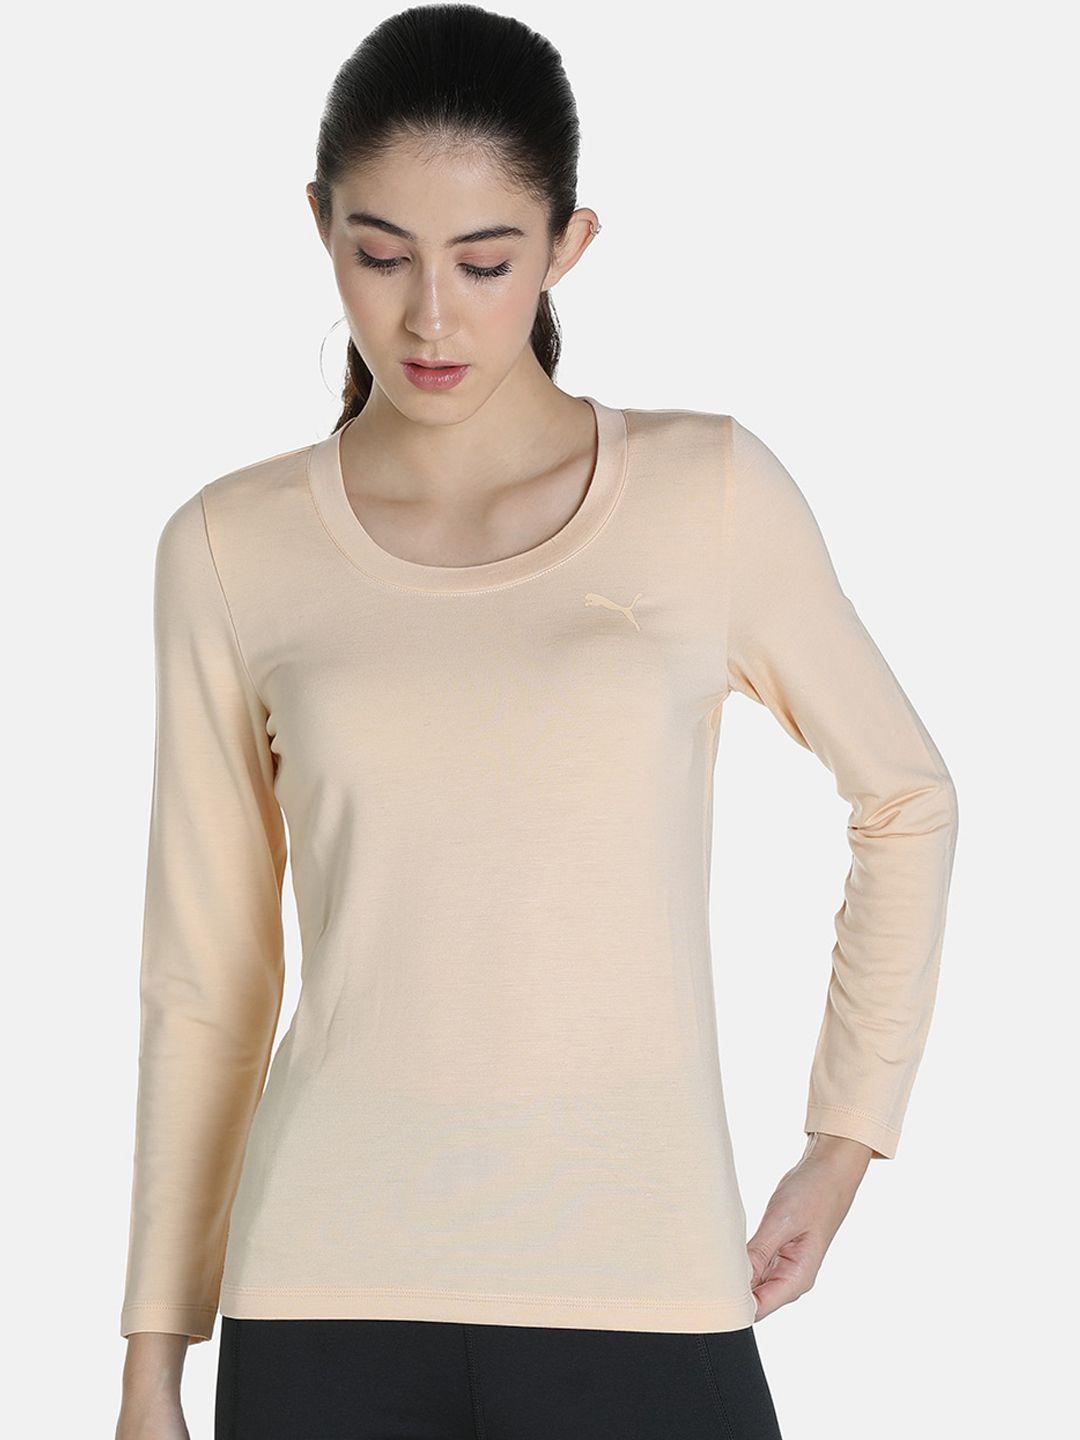 puma-women-cream-long-sleeve-thermal-top-cotton